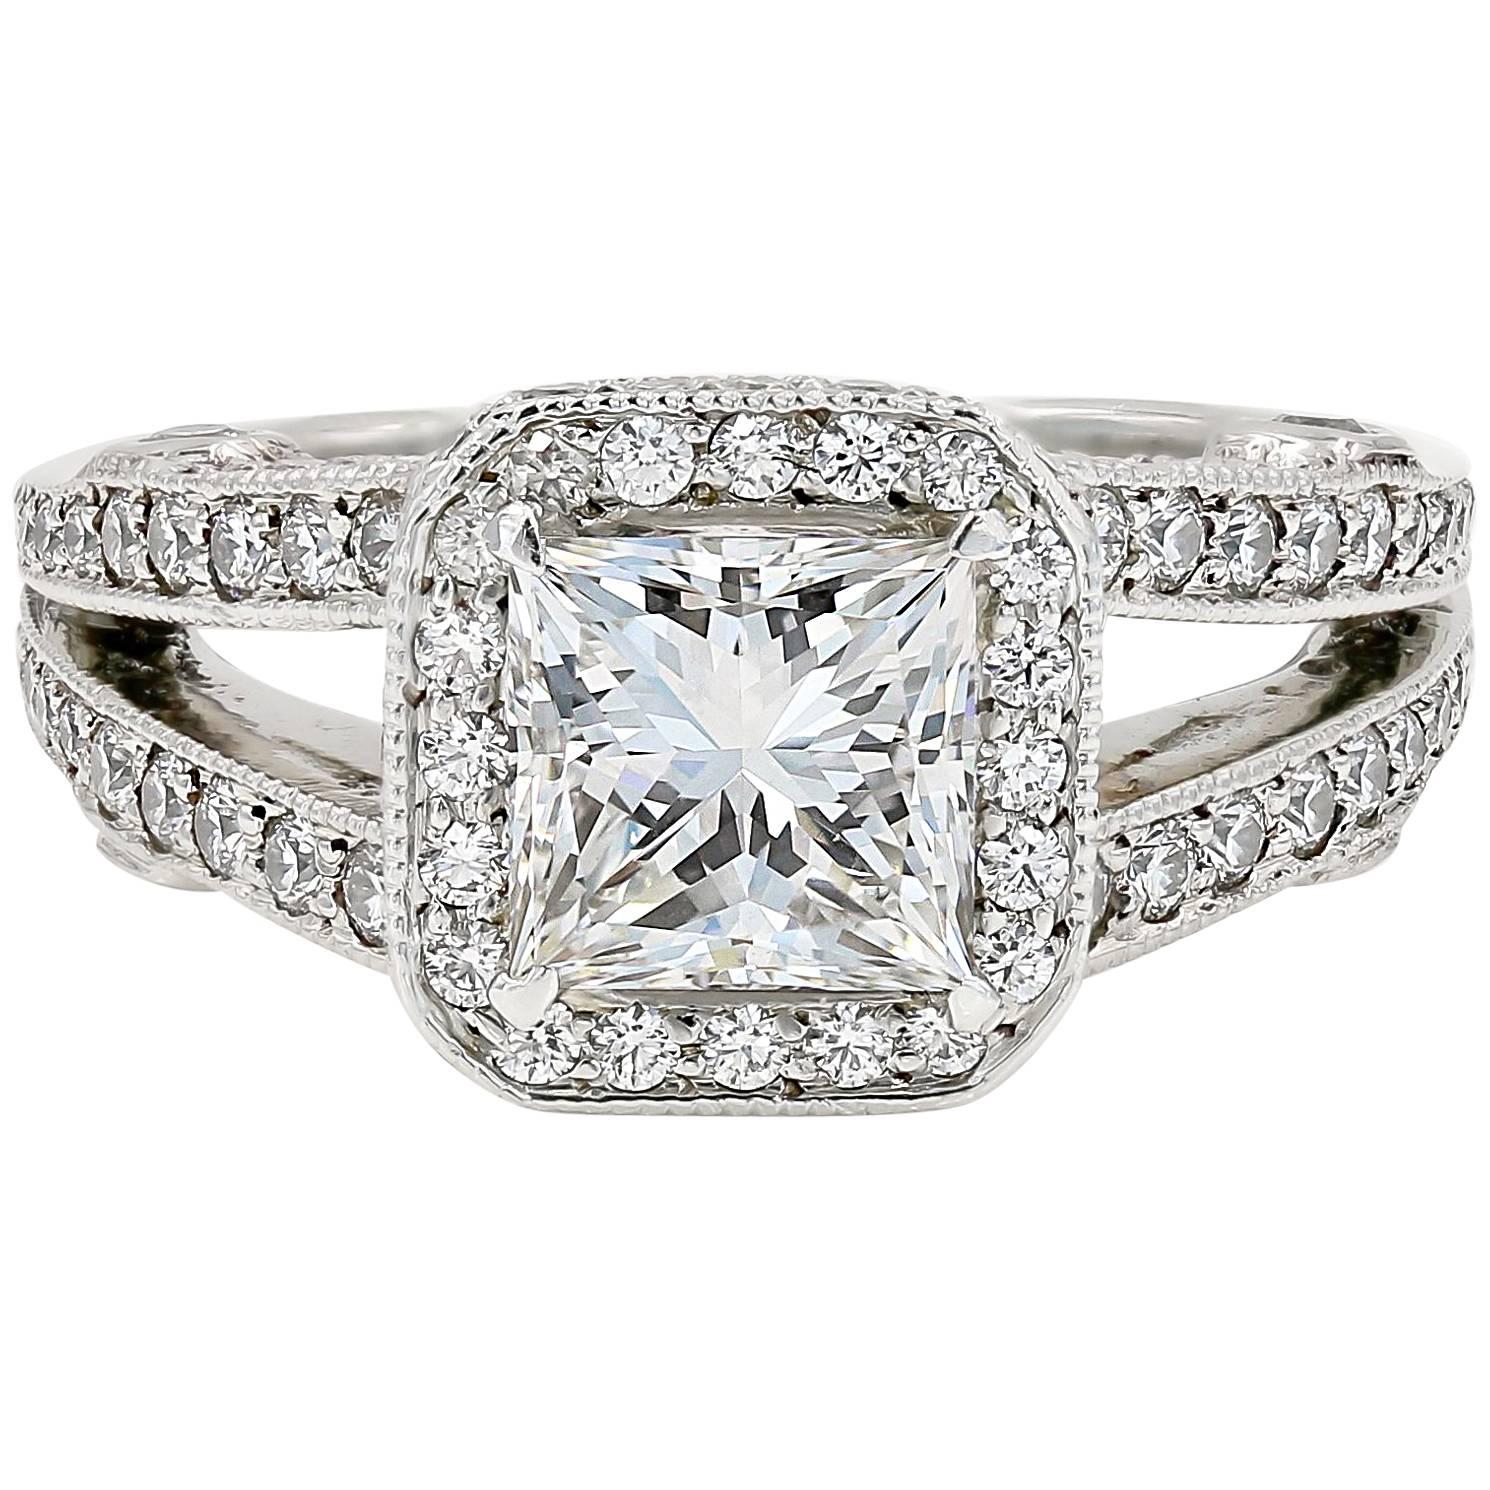 GIA Certified 1.57 Carat Princess Cut Diamond Engagement Ring